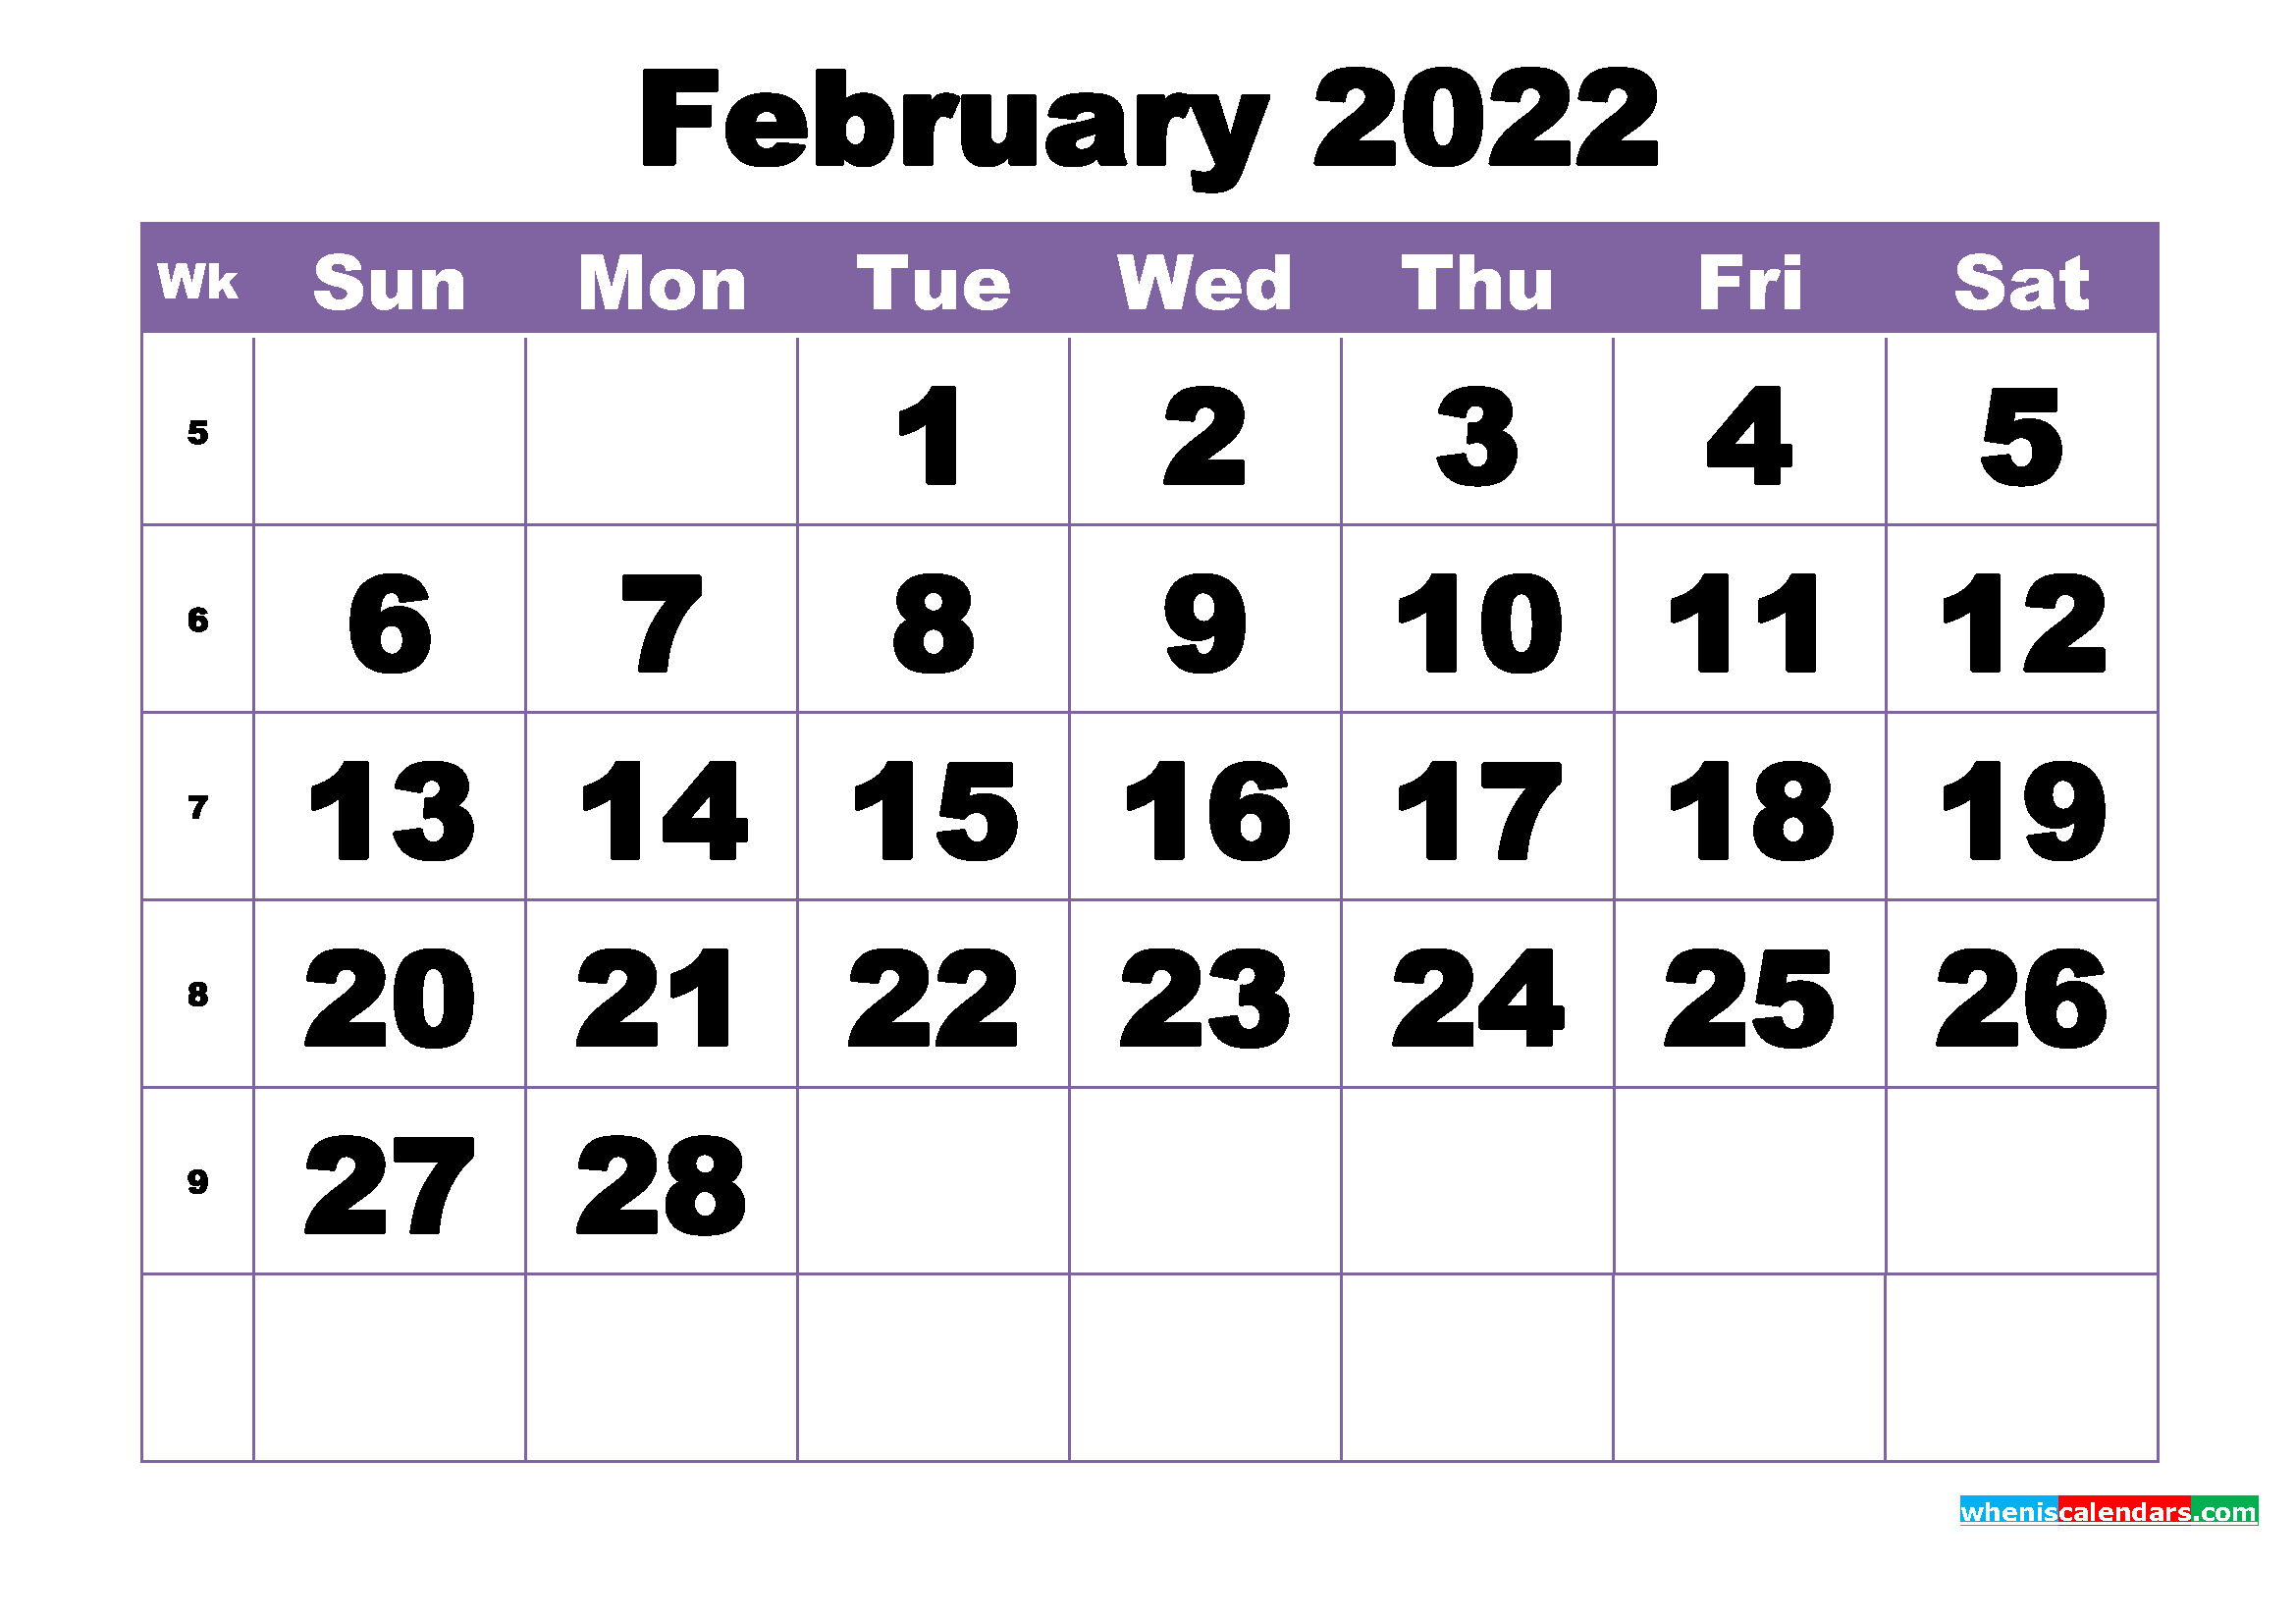 February 2022 Printable Calendar Template